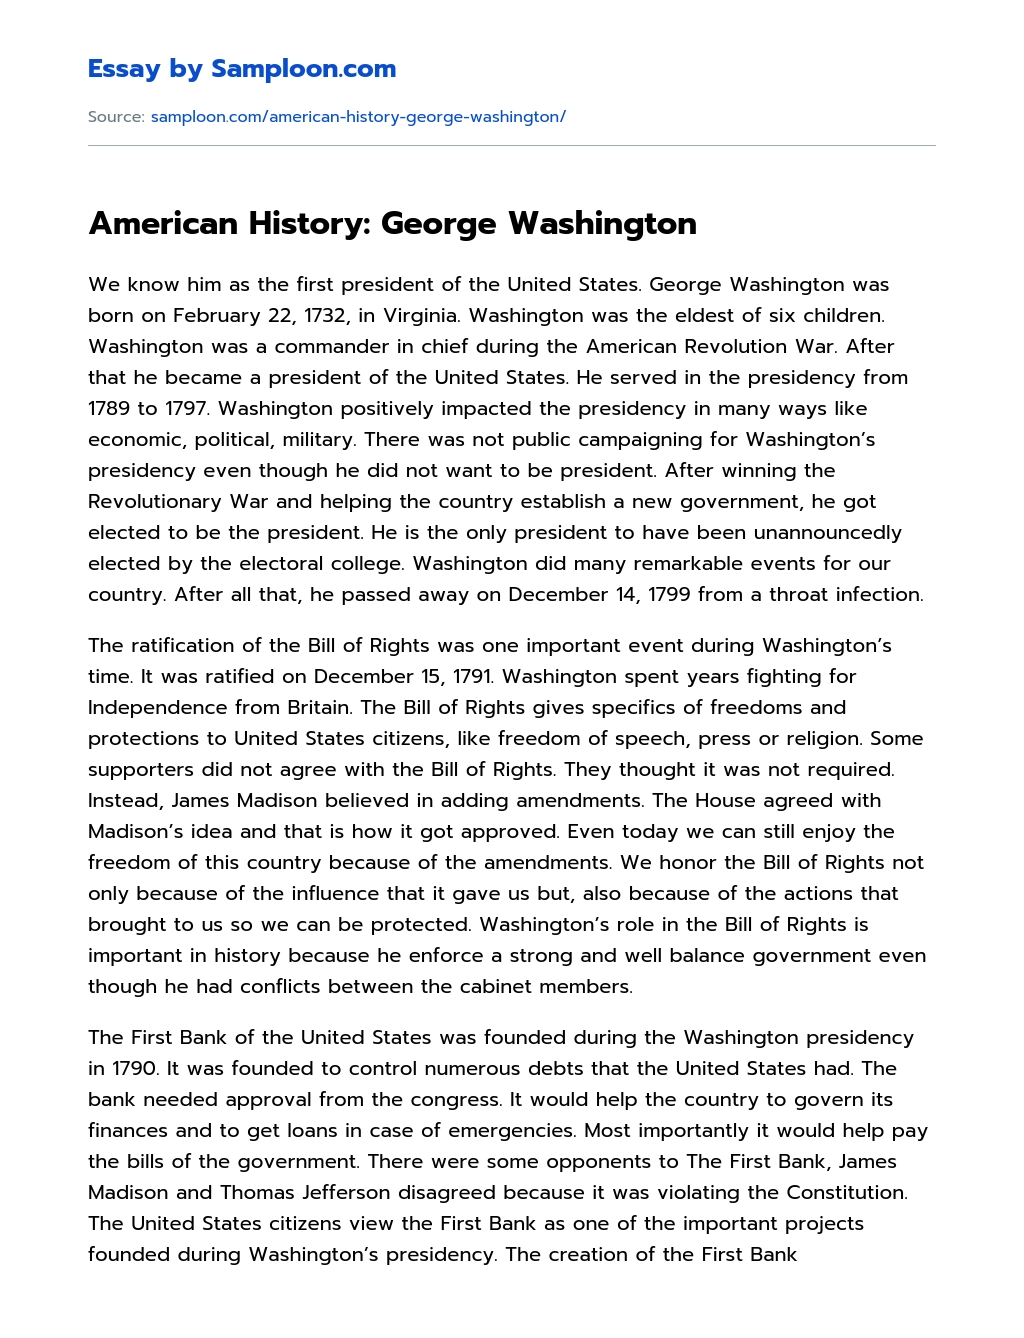 American History: George Washington essay